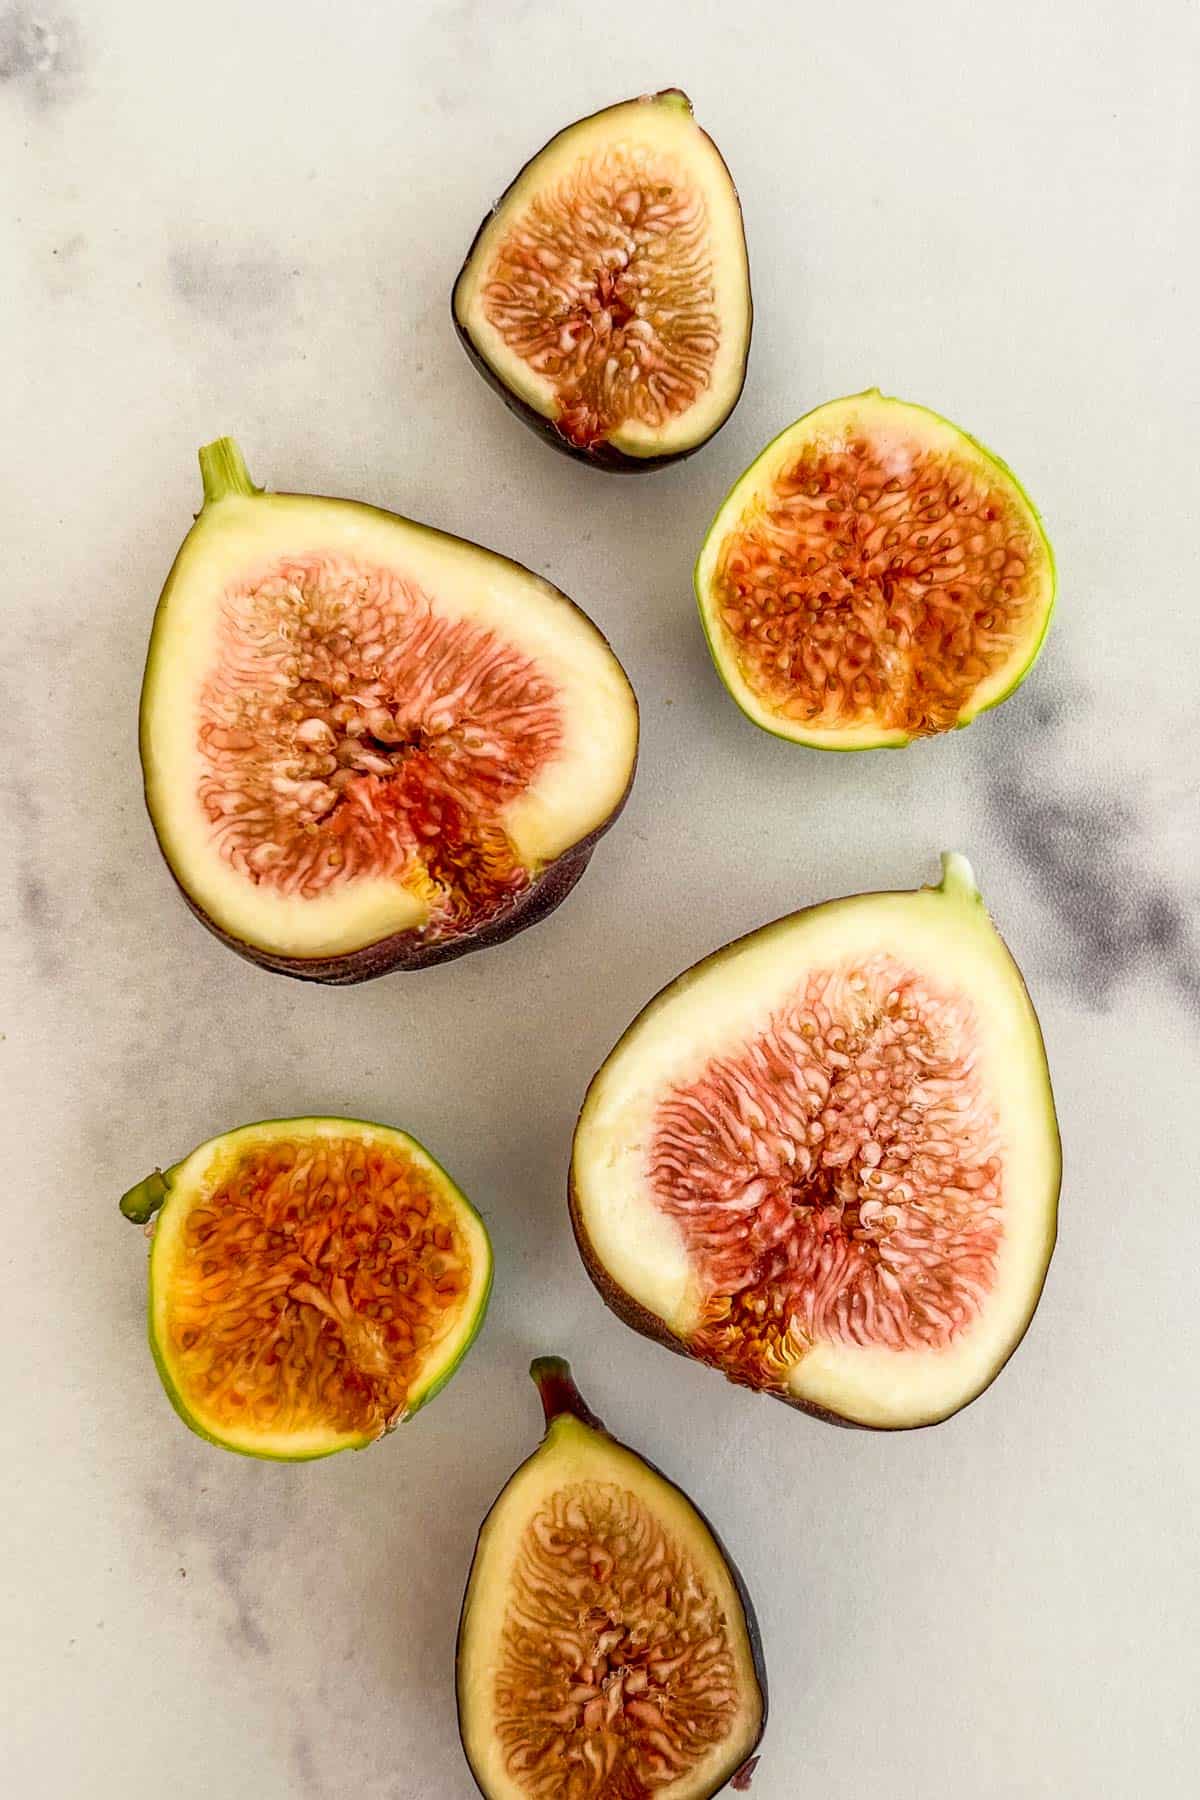 Several figs cut in half.